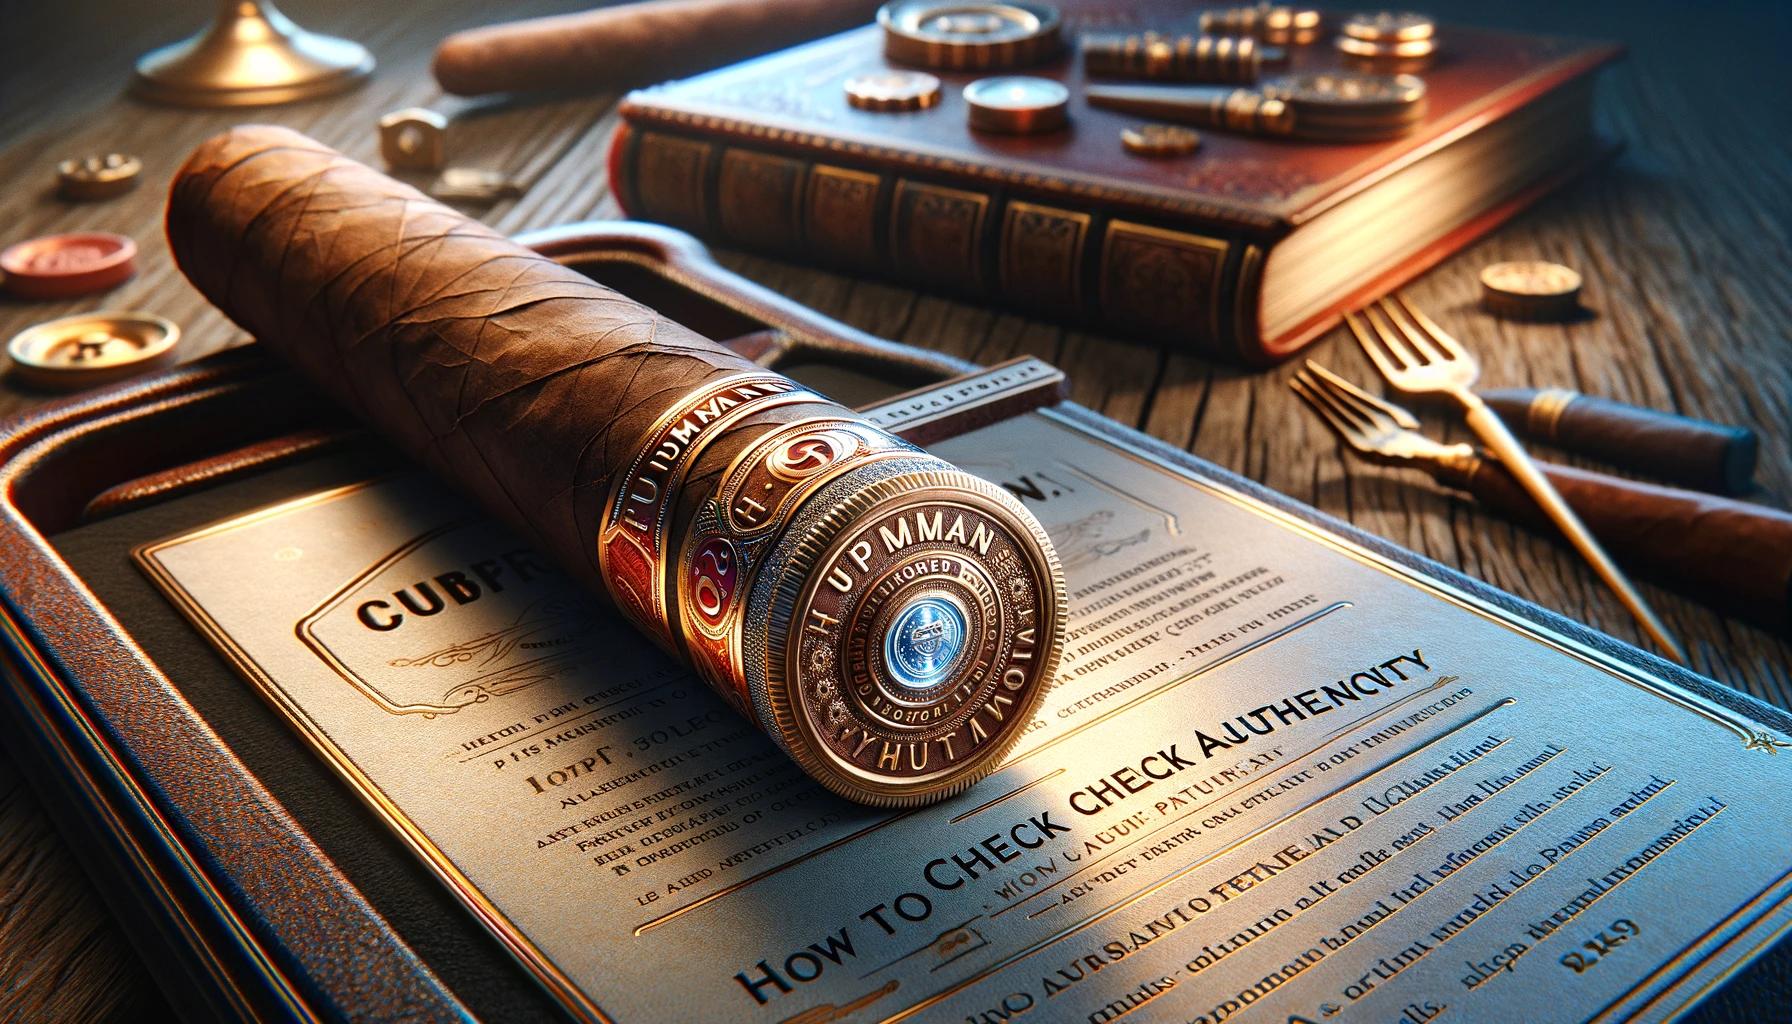 A box of H Upmann Cigars